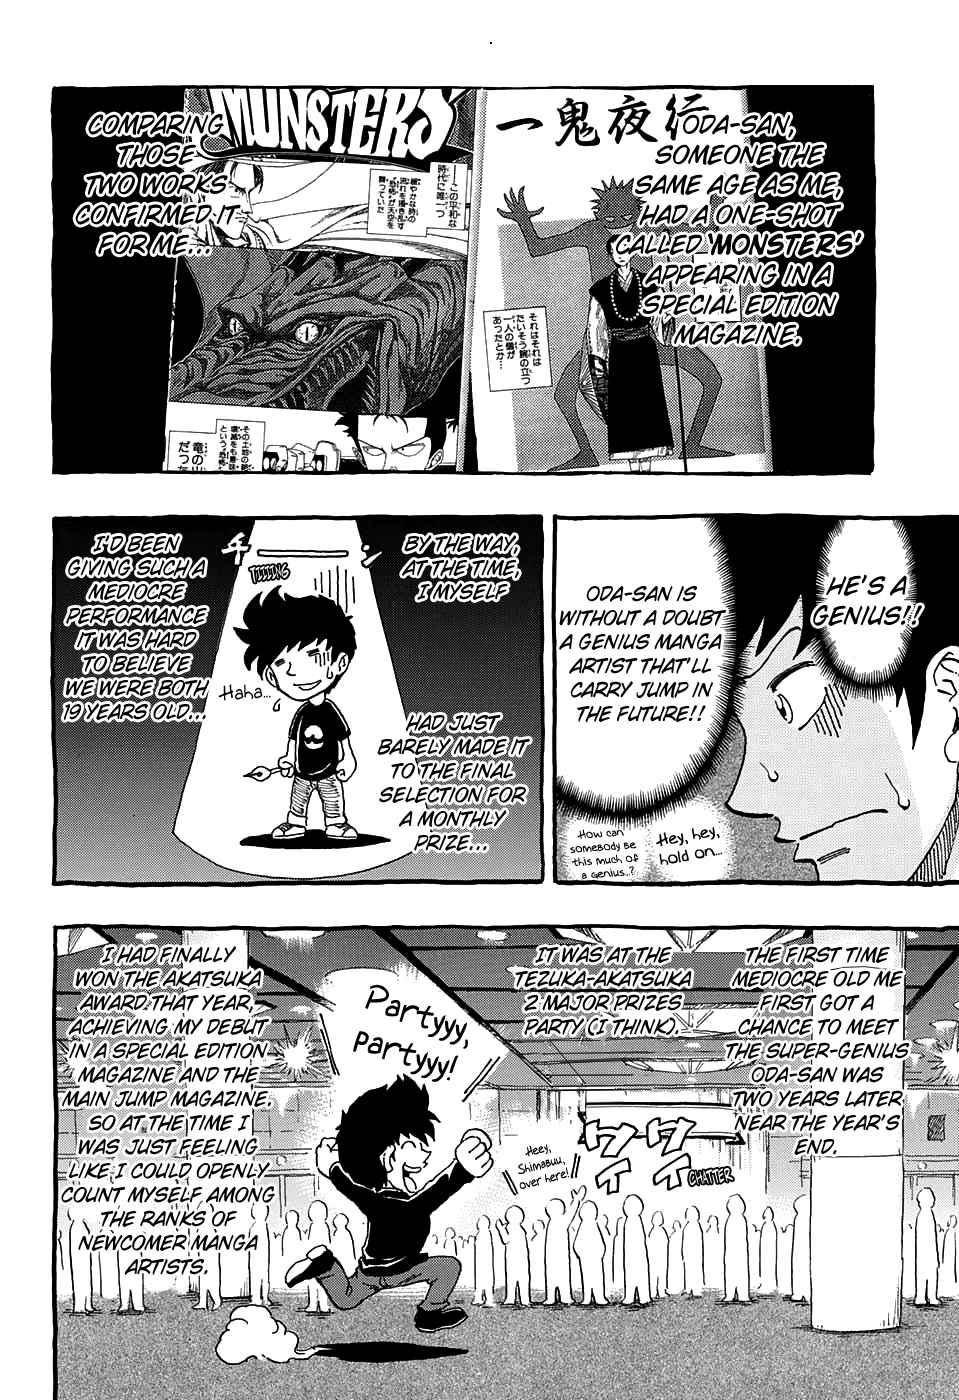 Memories with Oda-san Manga! Vol.1 Ch.1